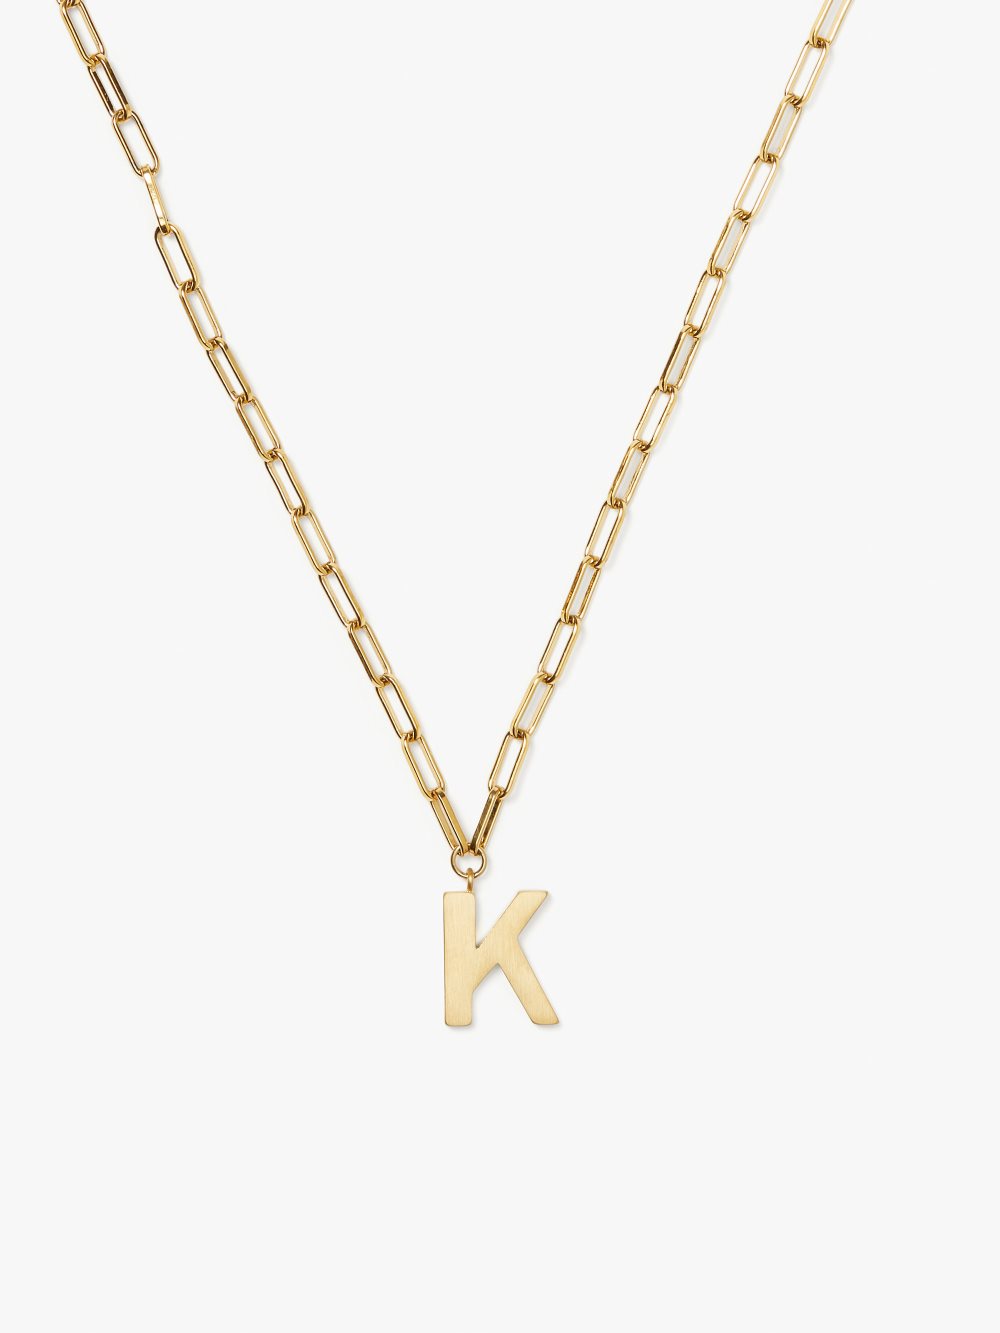 Women's gold. k initial this pendant | Kate Spade